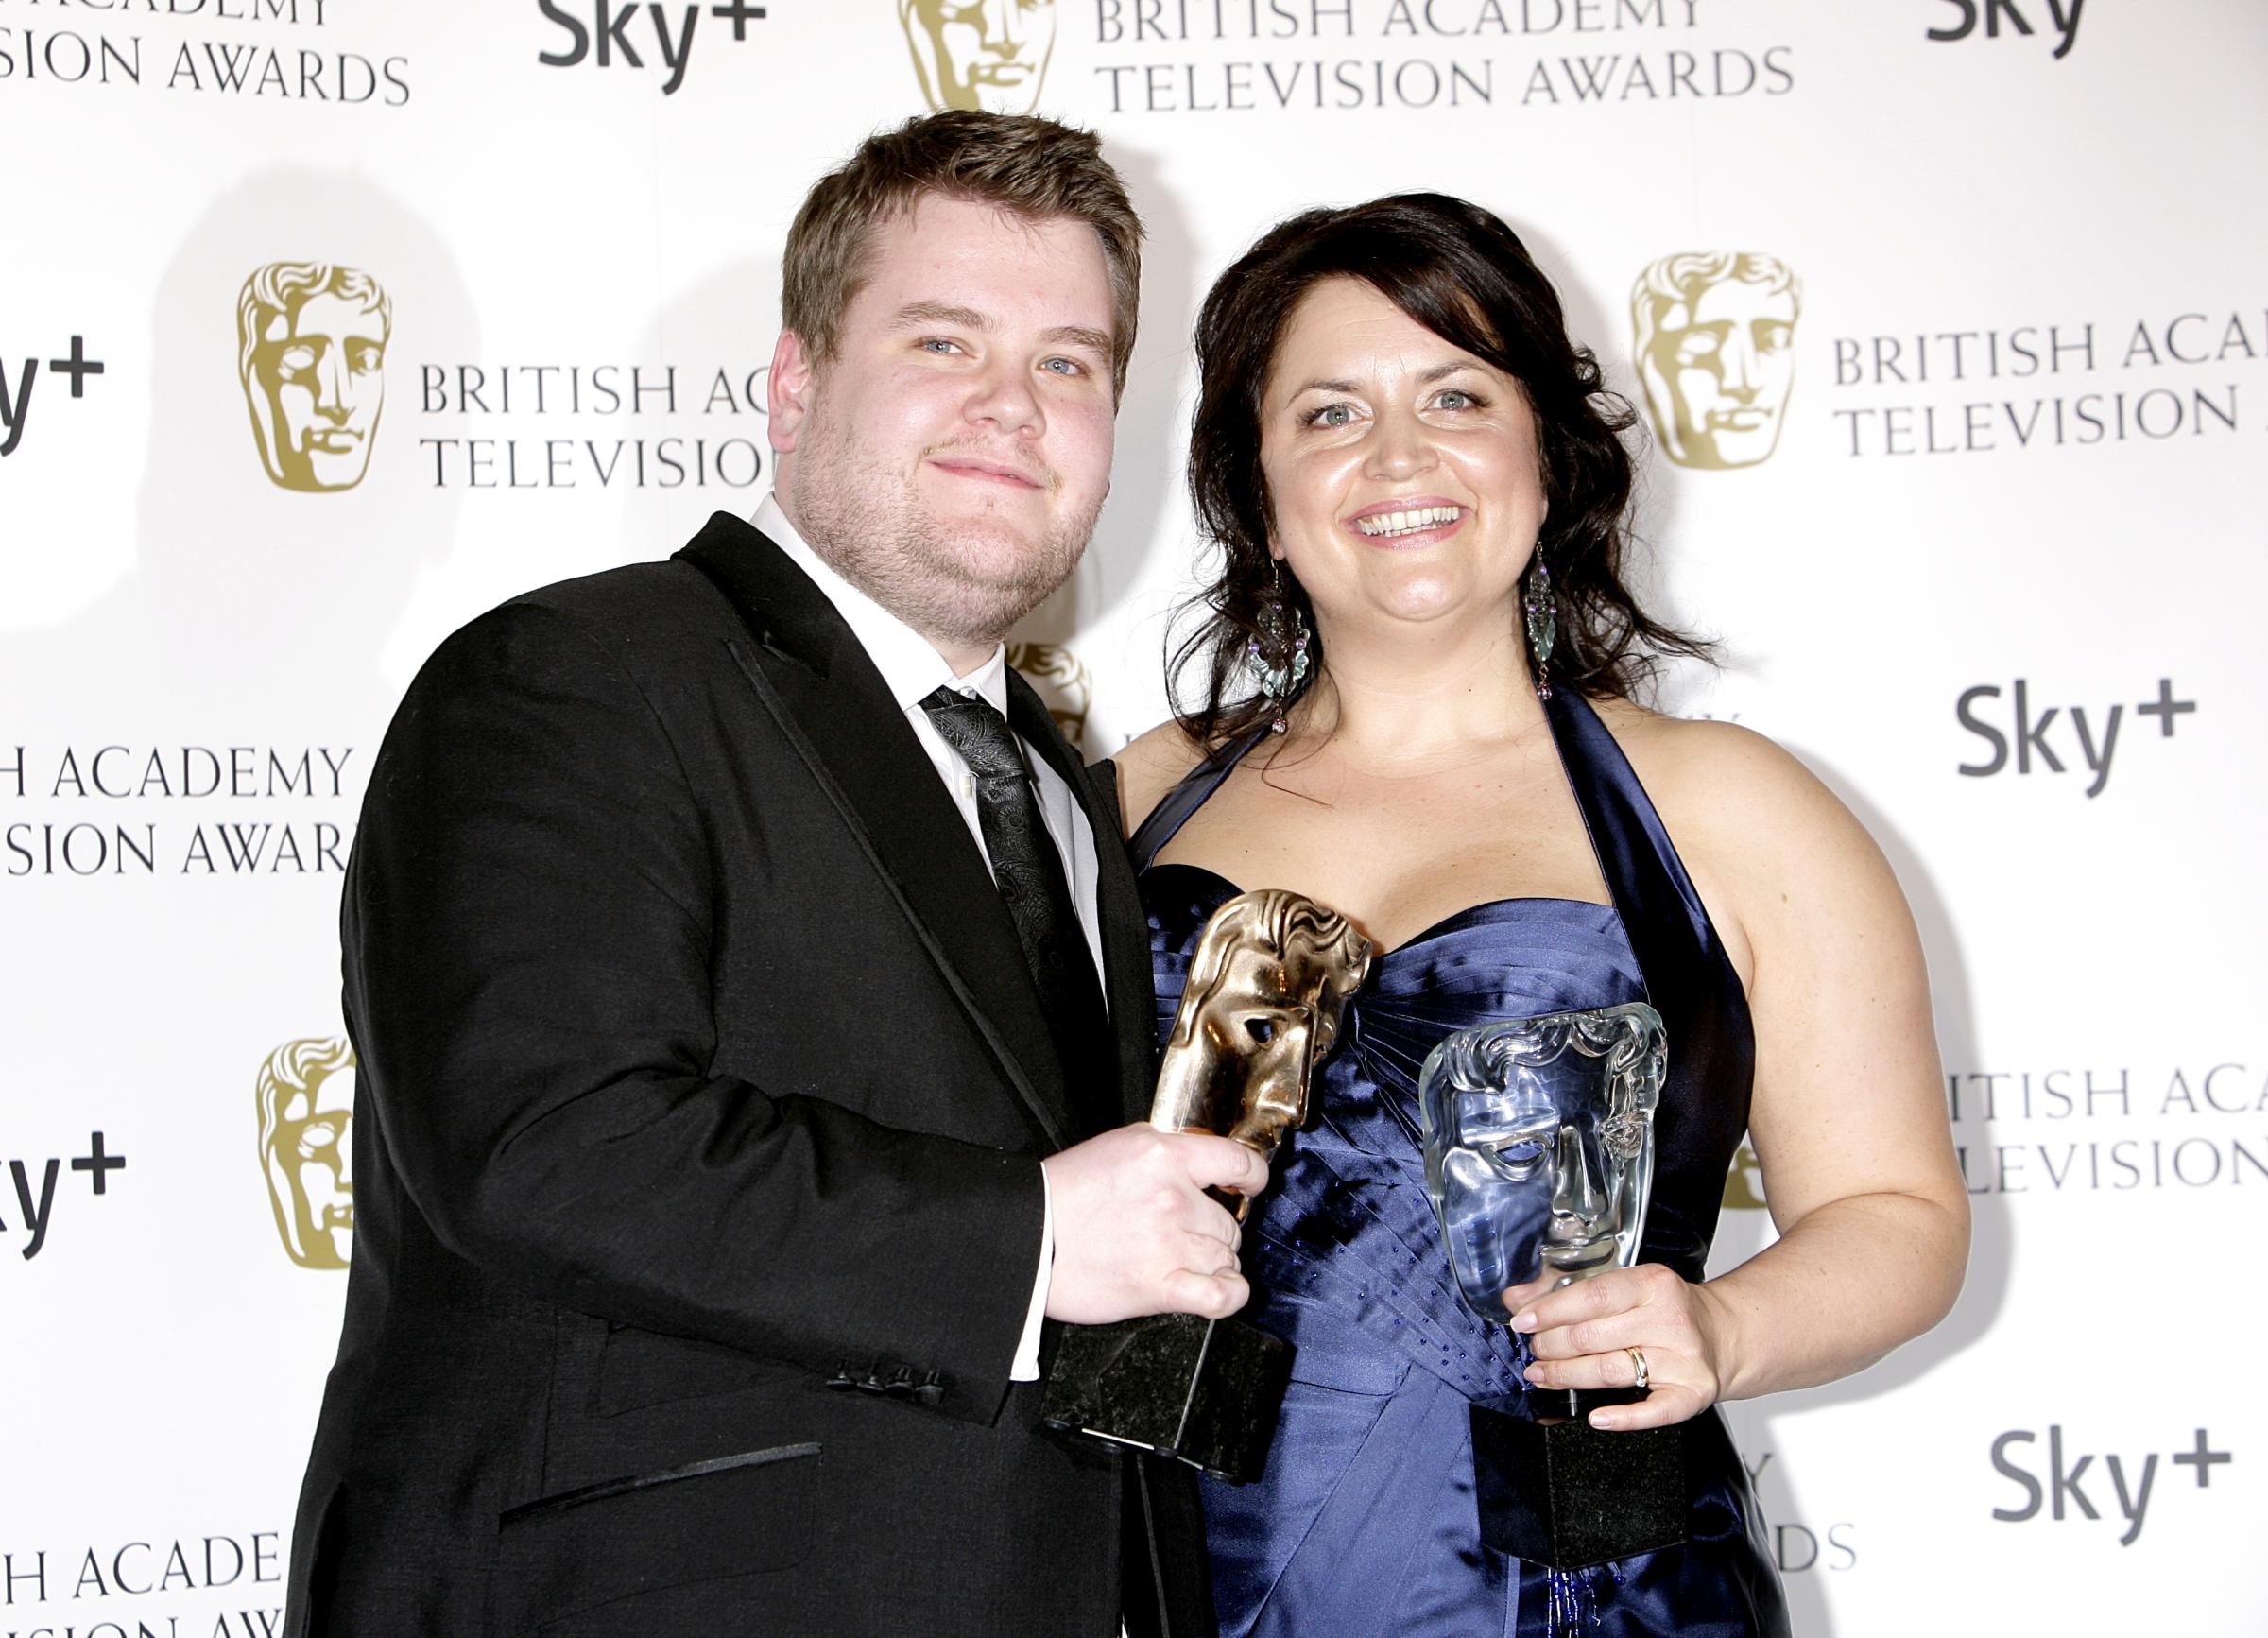 British Academy Television Awards - Press Room - London